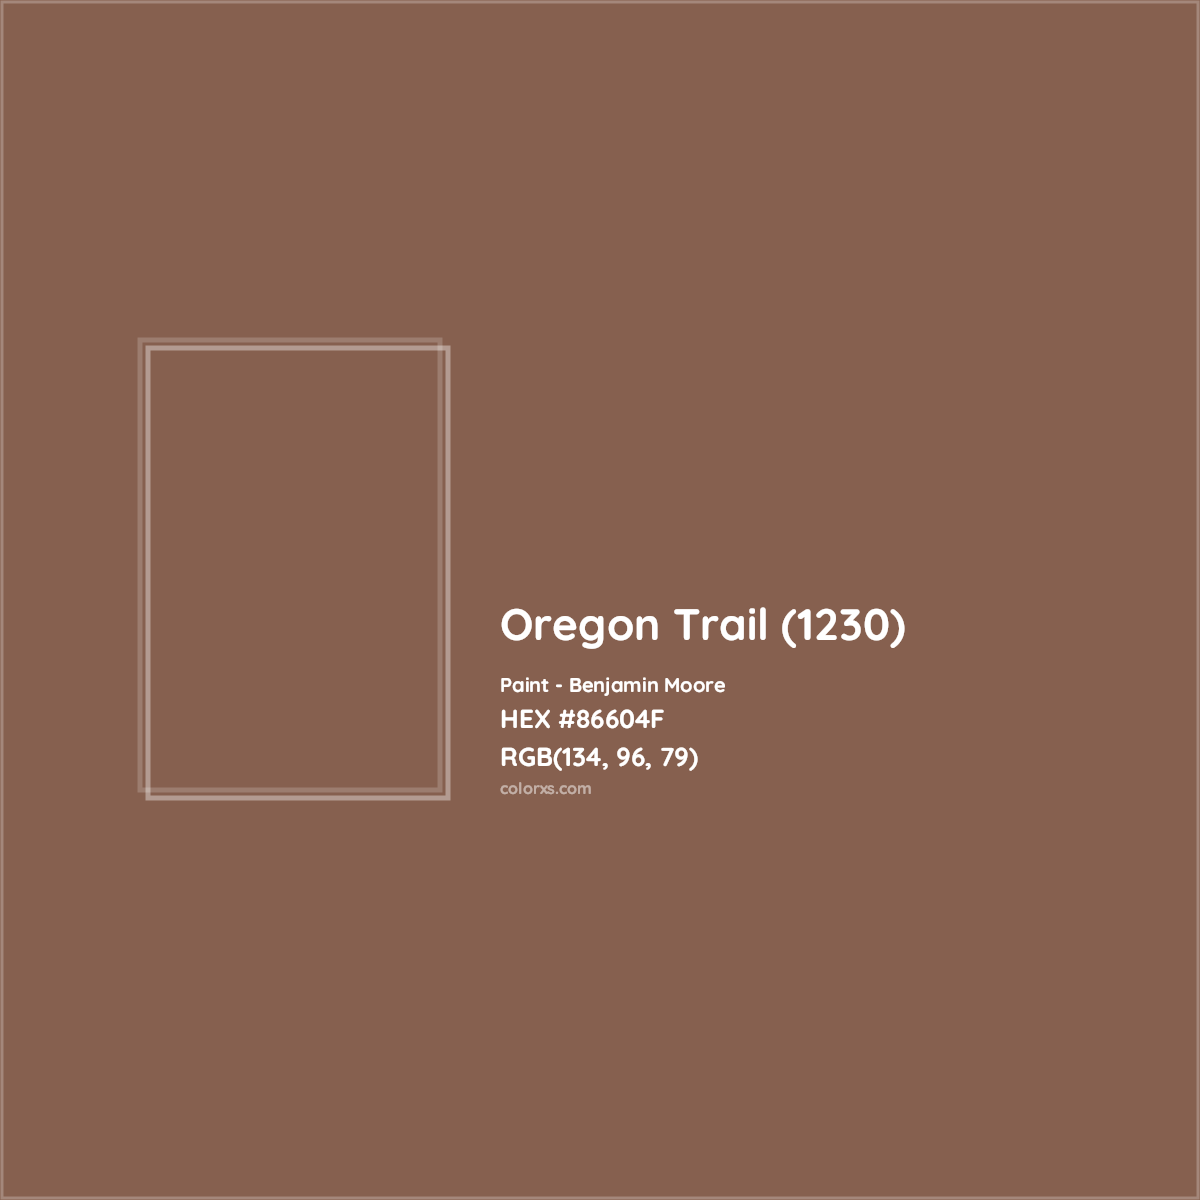 HEX #86604F Oregon Trail (1230) Paint Benjamin Moore - Color Code